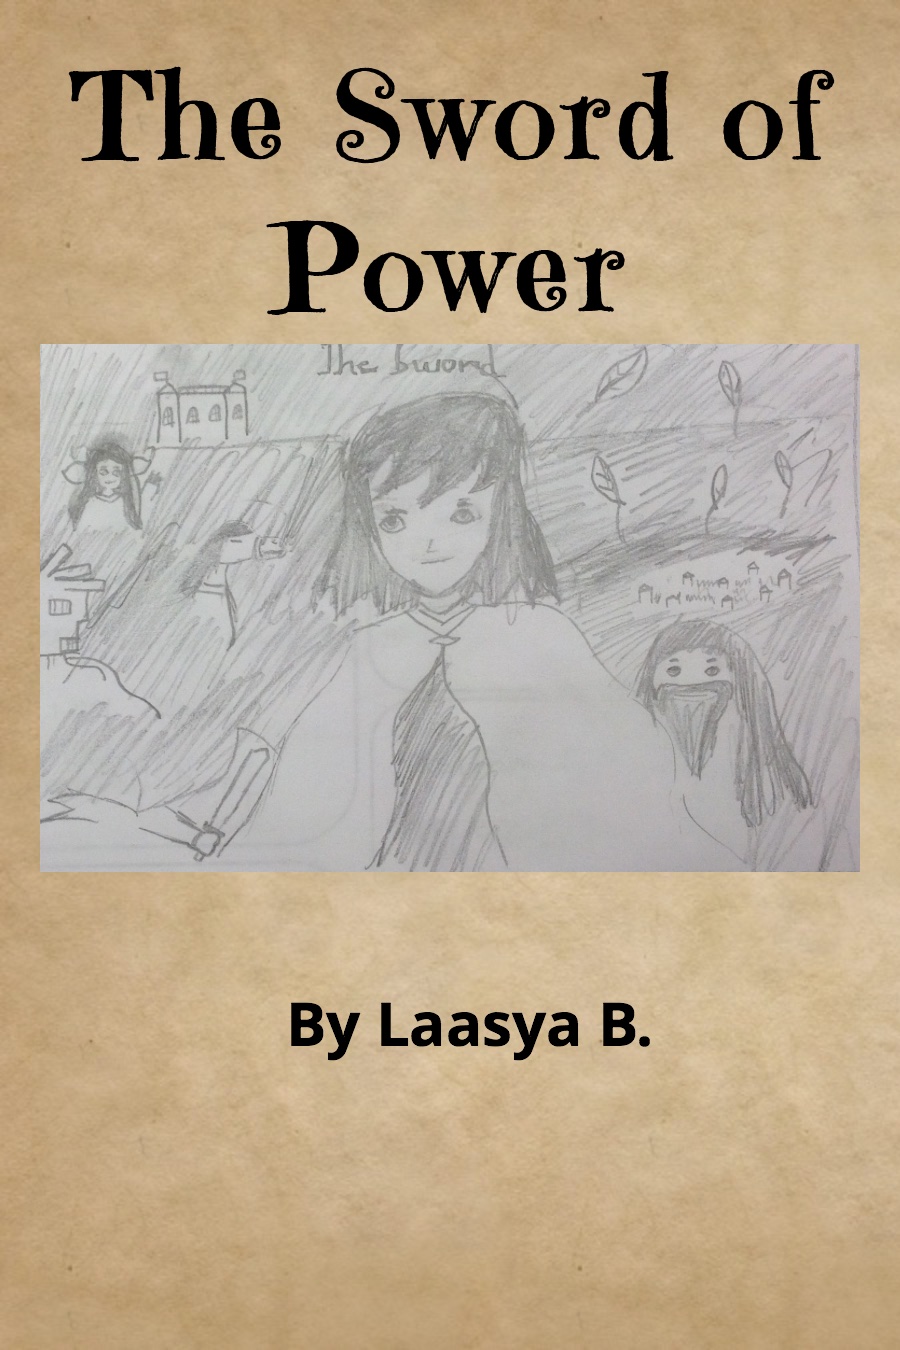 The Sword of Power by Laasya B